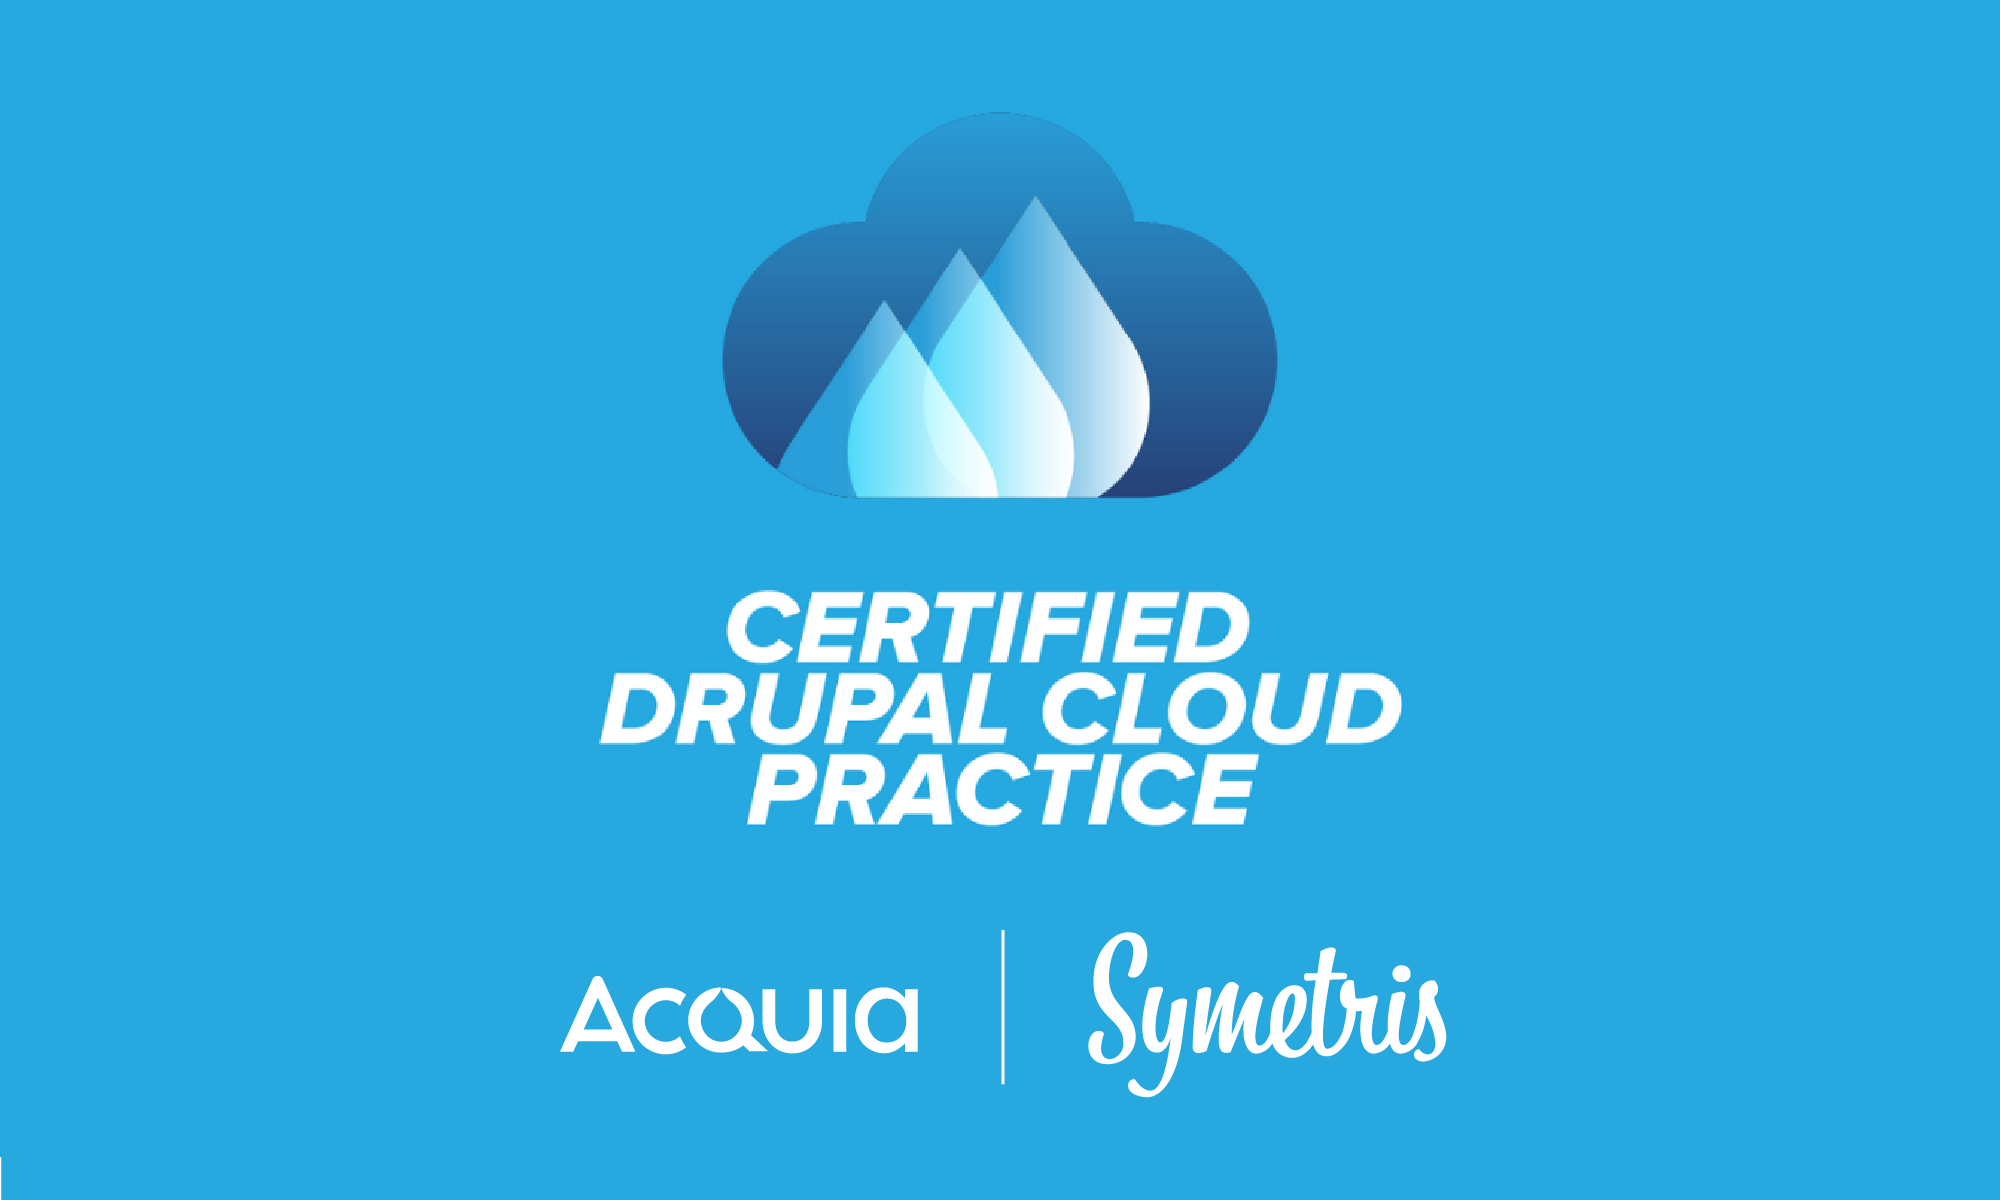 Symetris is officially Acquia Certified Drupal Cloud Practice